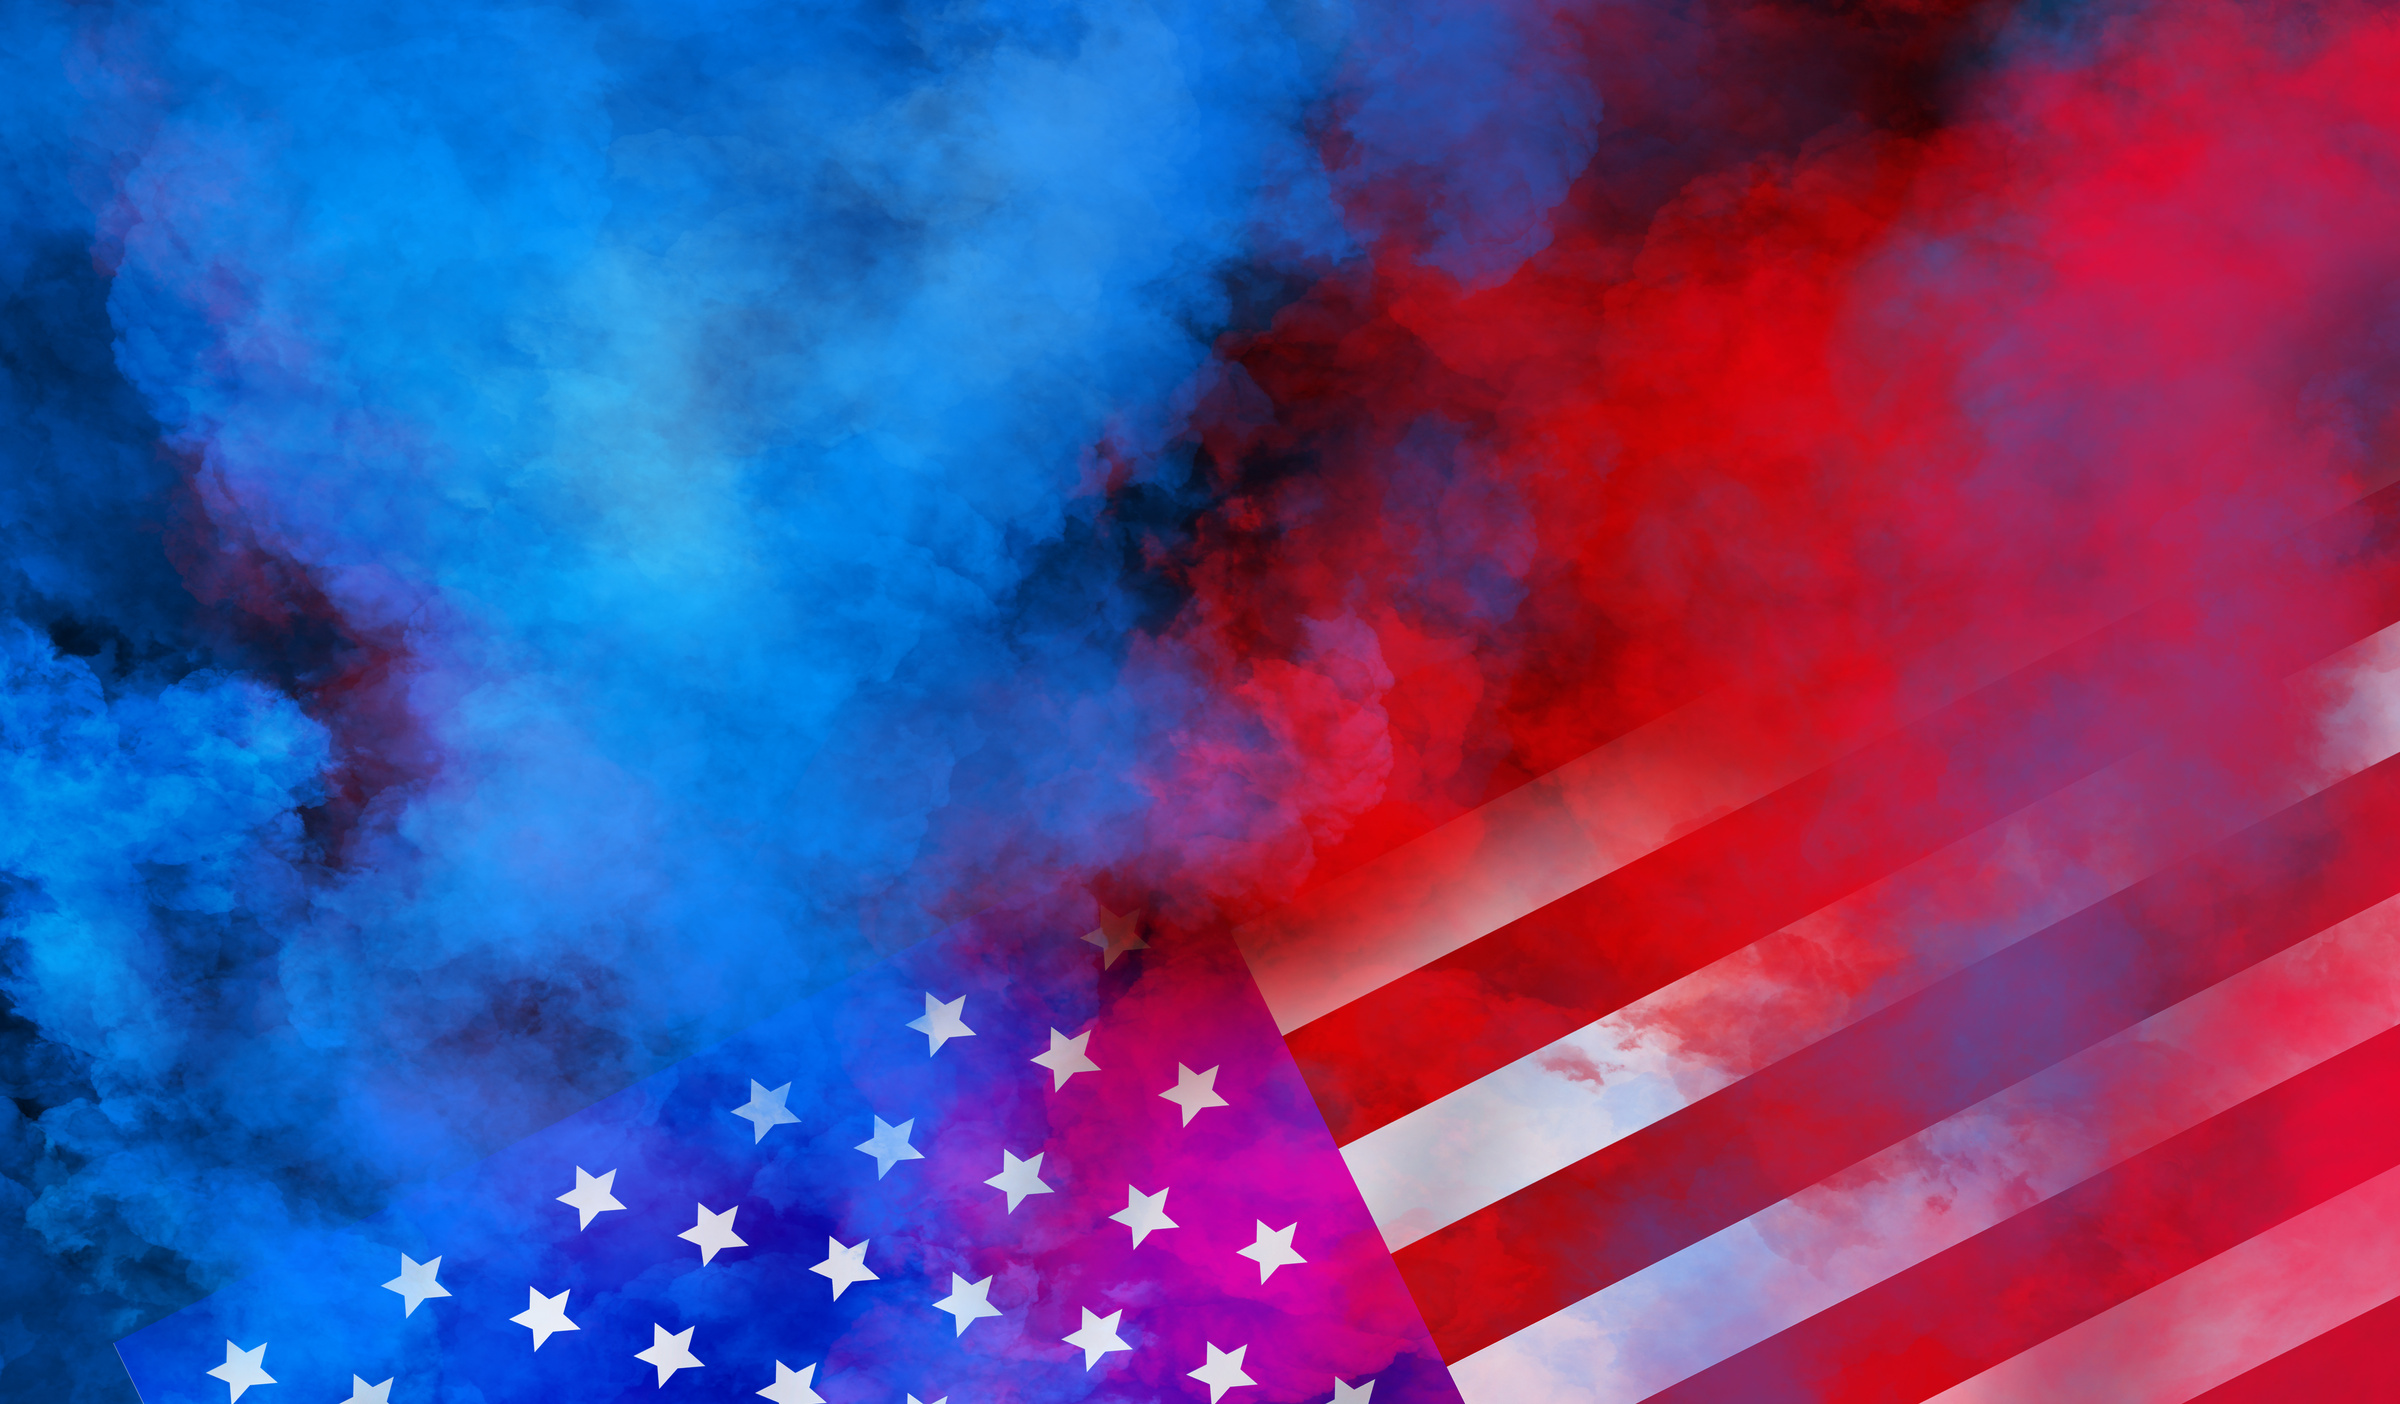 USA Flag with Red and Blue Smoke